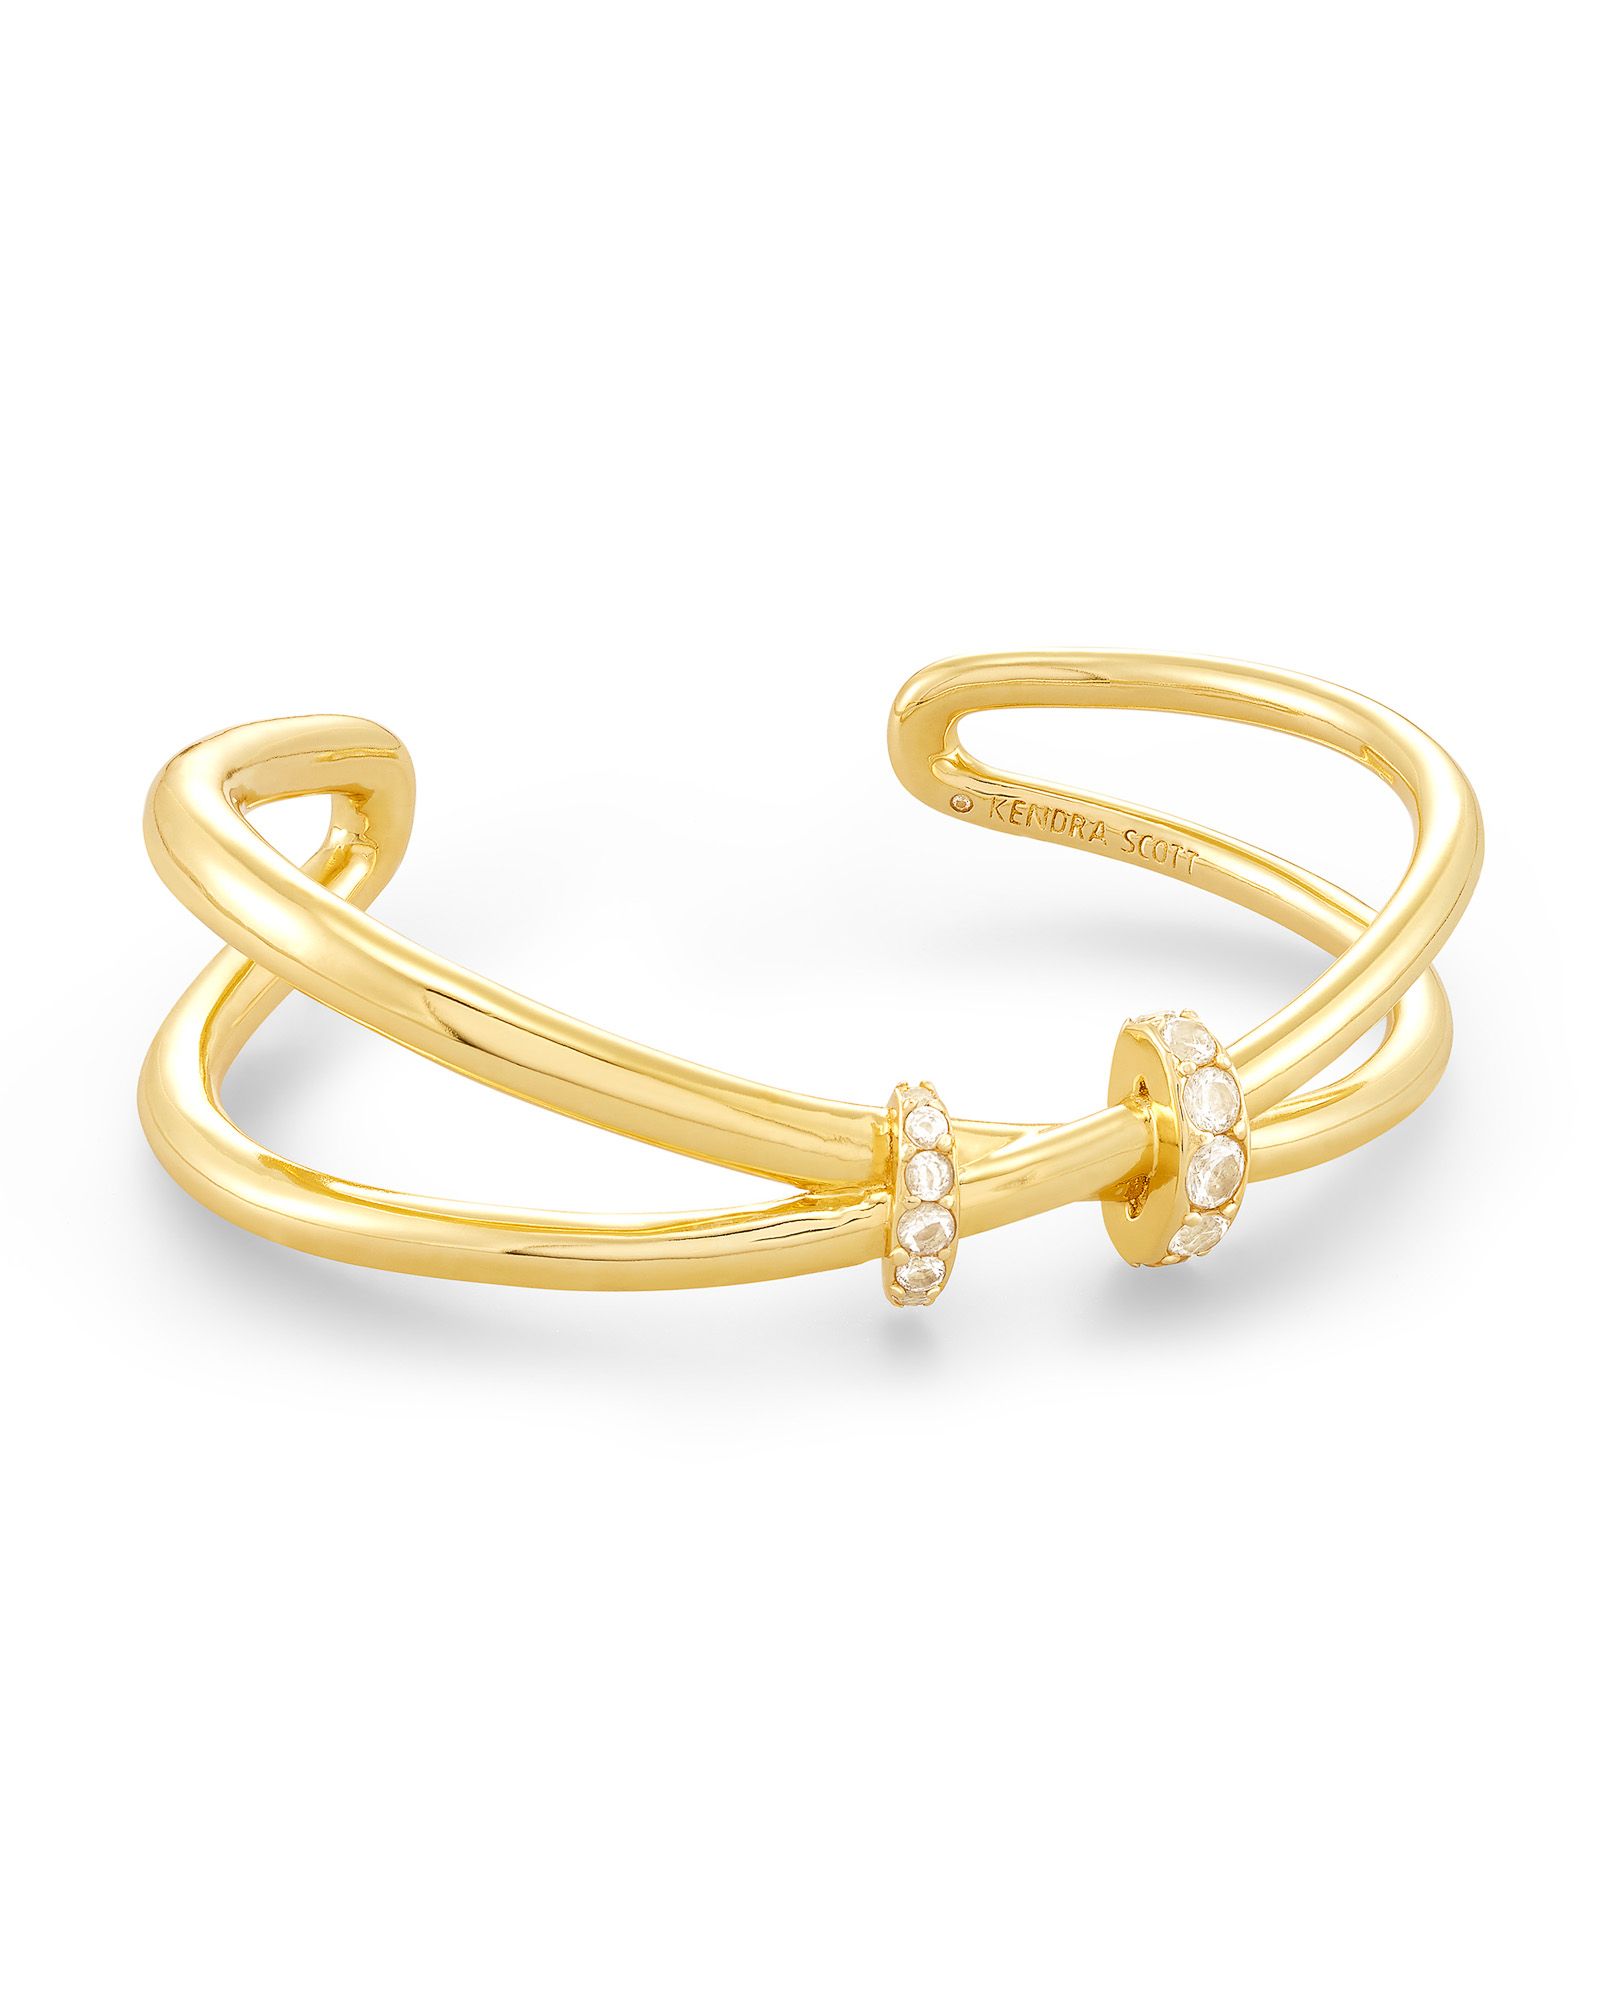 Livy Gold Cuff Bracelet in White Crystal | Kendra Scott | Kendra Scott